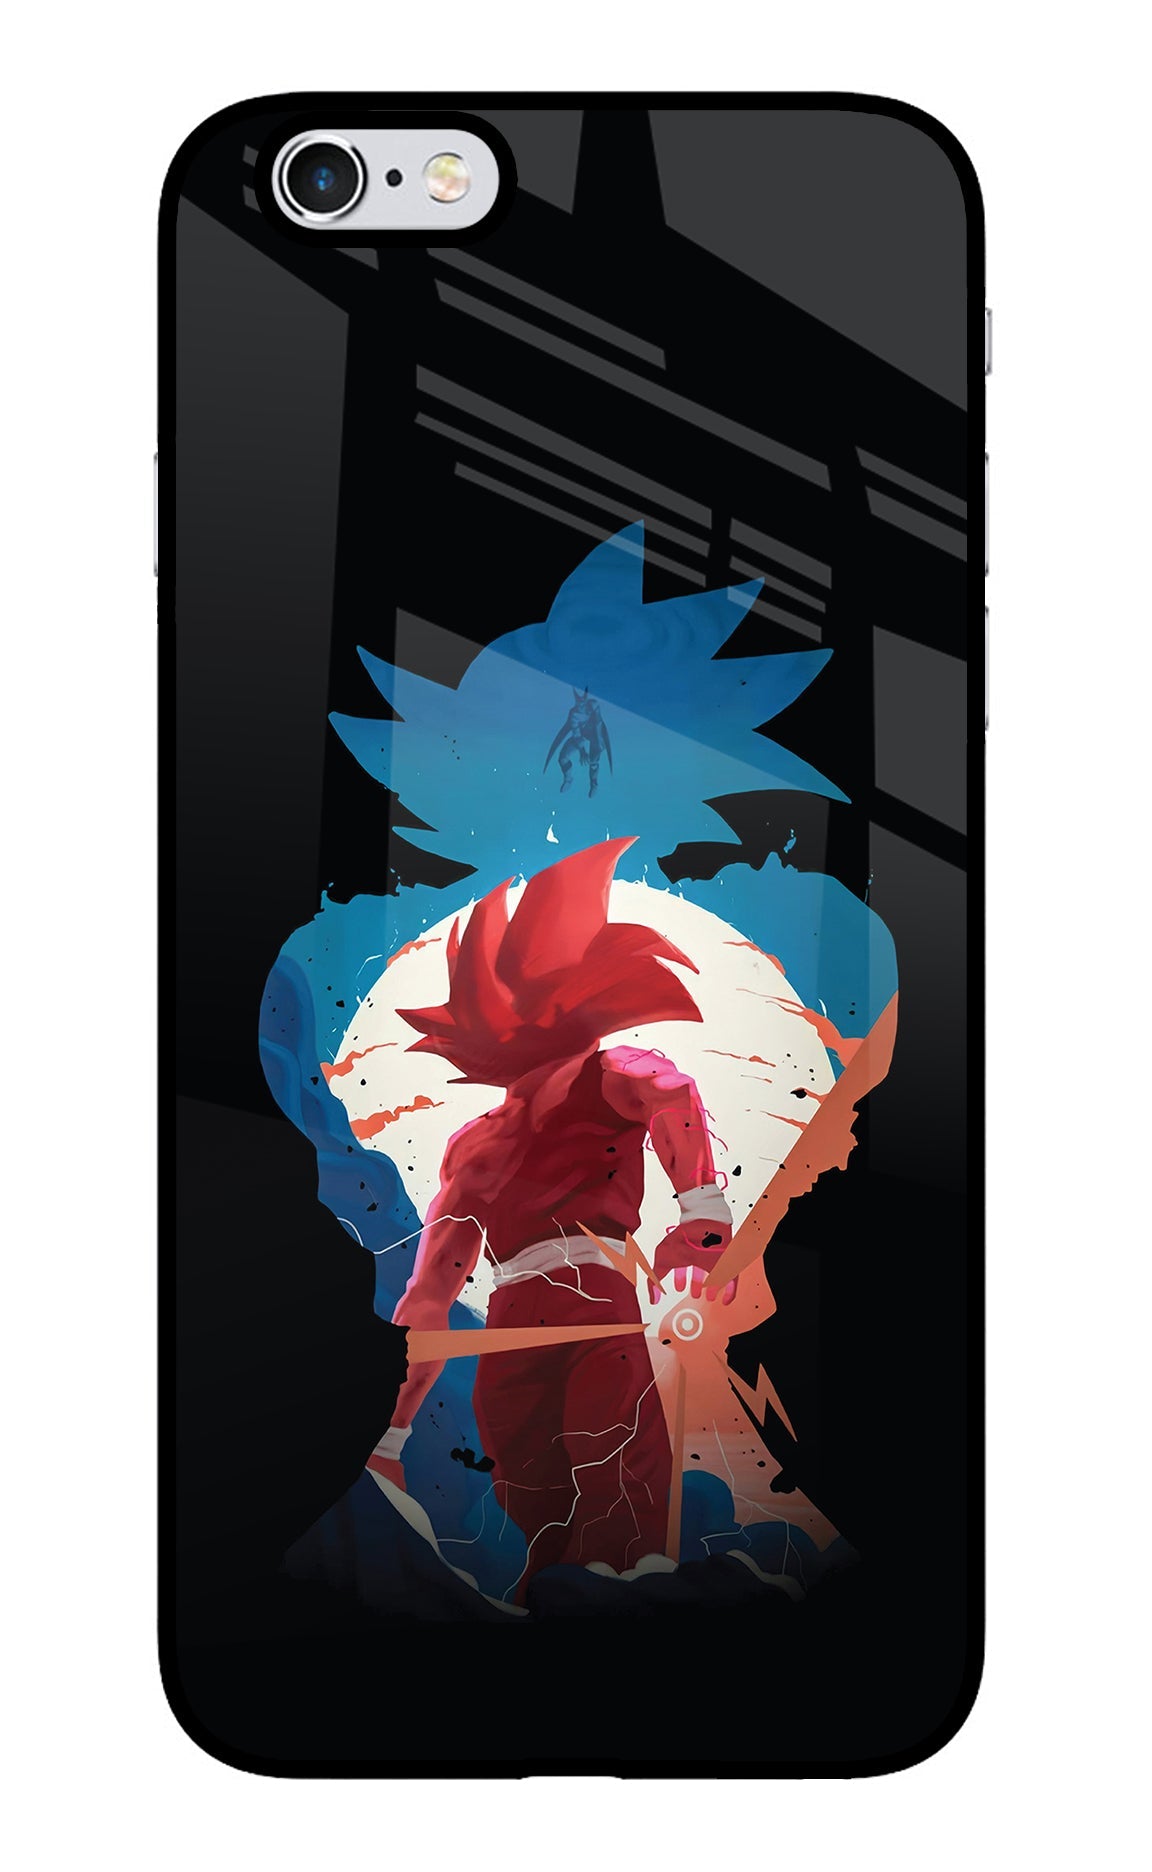 Goku iPhone 6/6s Glass Case